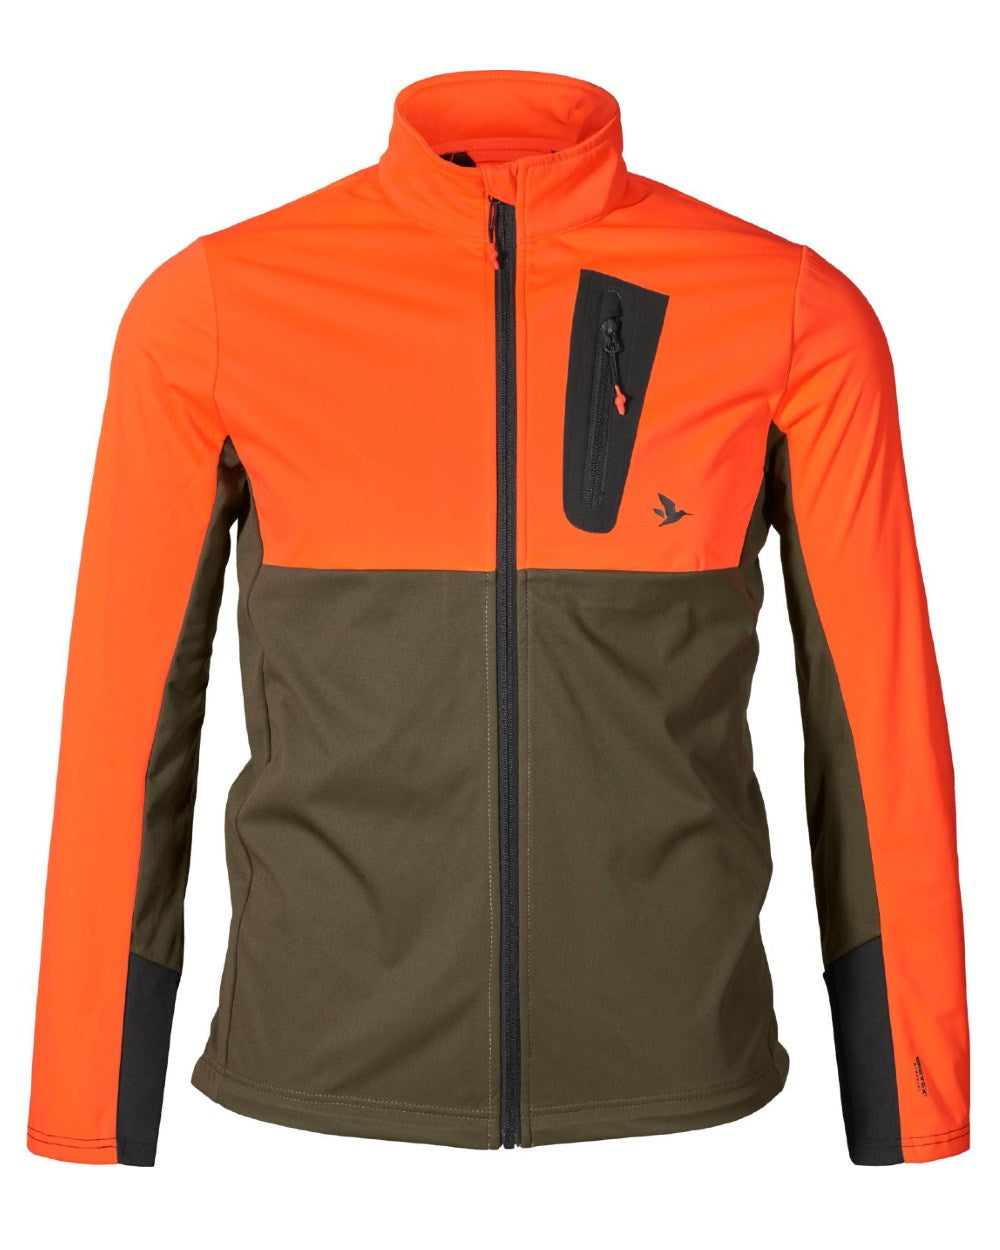 Hi-Vis Orange Coloured Seeland Force Advanced Softshell Jacket On A White Background